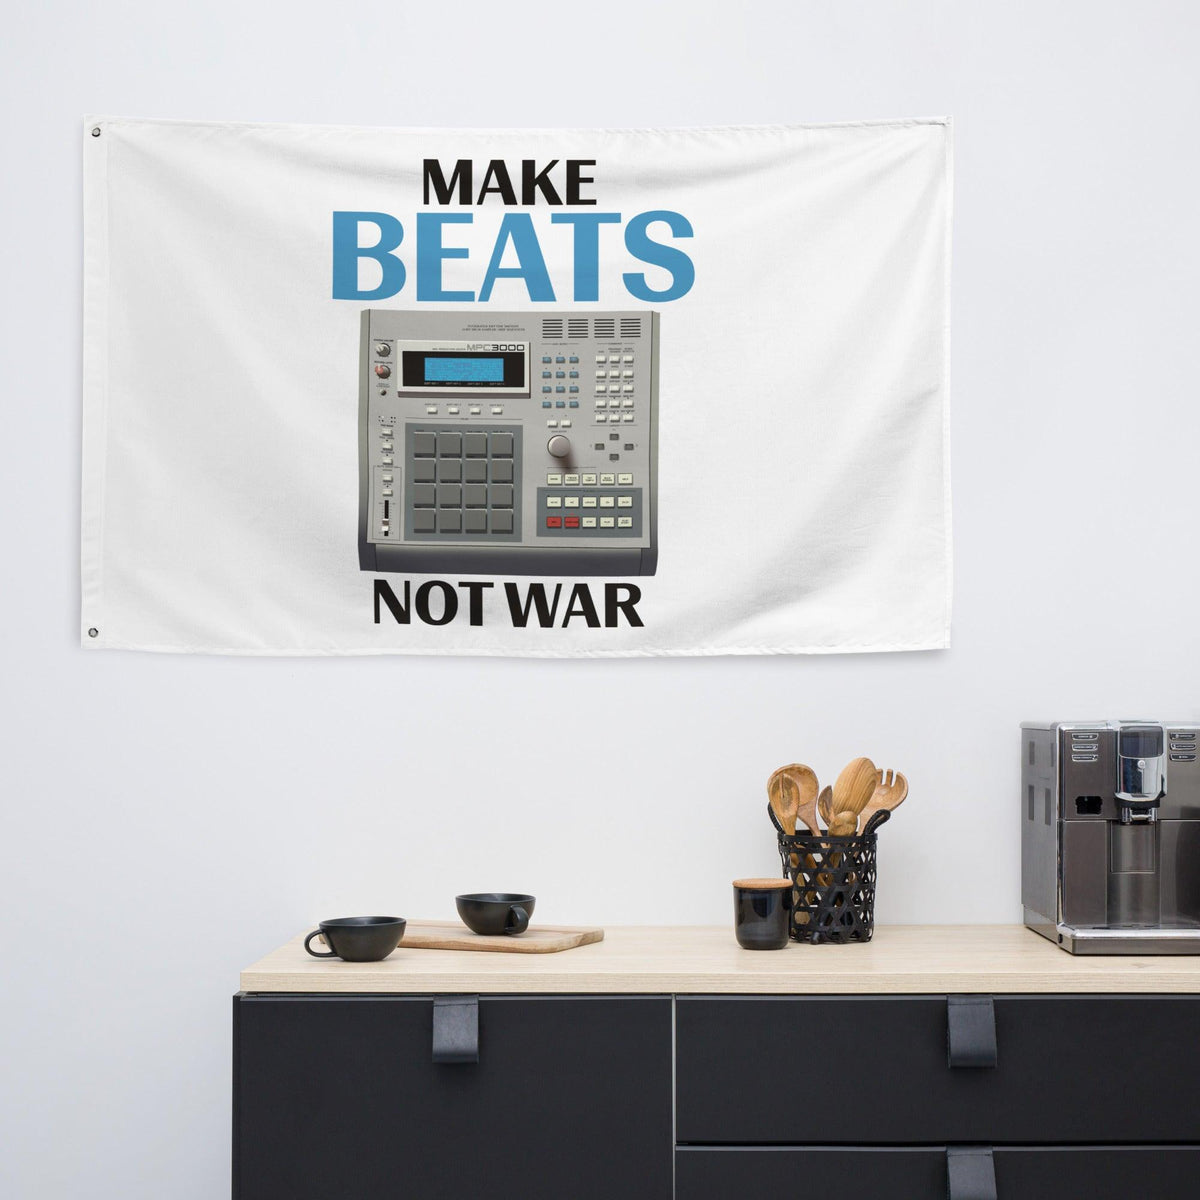 Akai MPC3000 Artist Rendition Drum Machine "Make Beats Not War" Flag (Horizontal) - Tedeschi Studio, LLC.